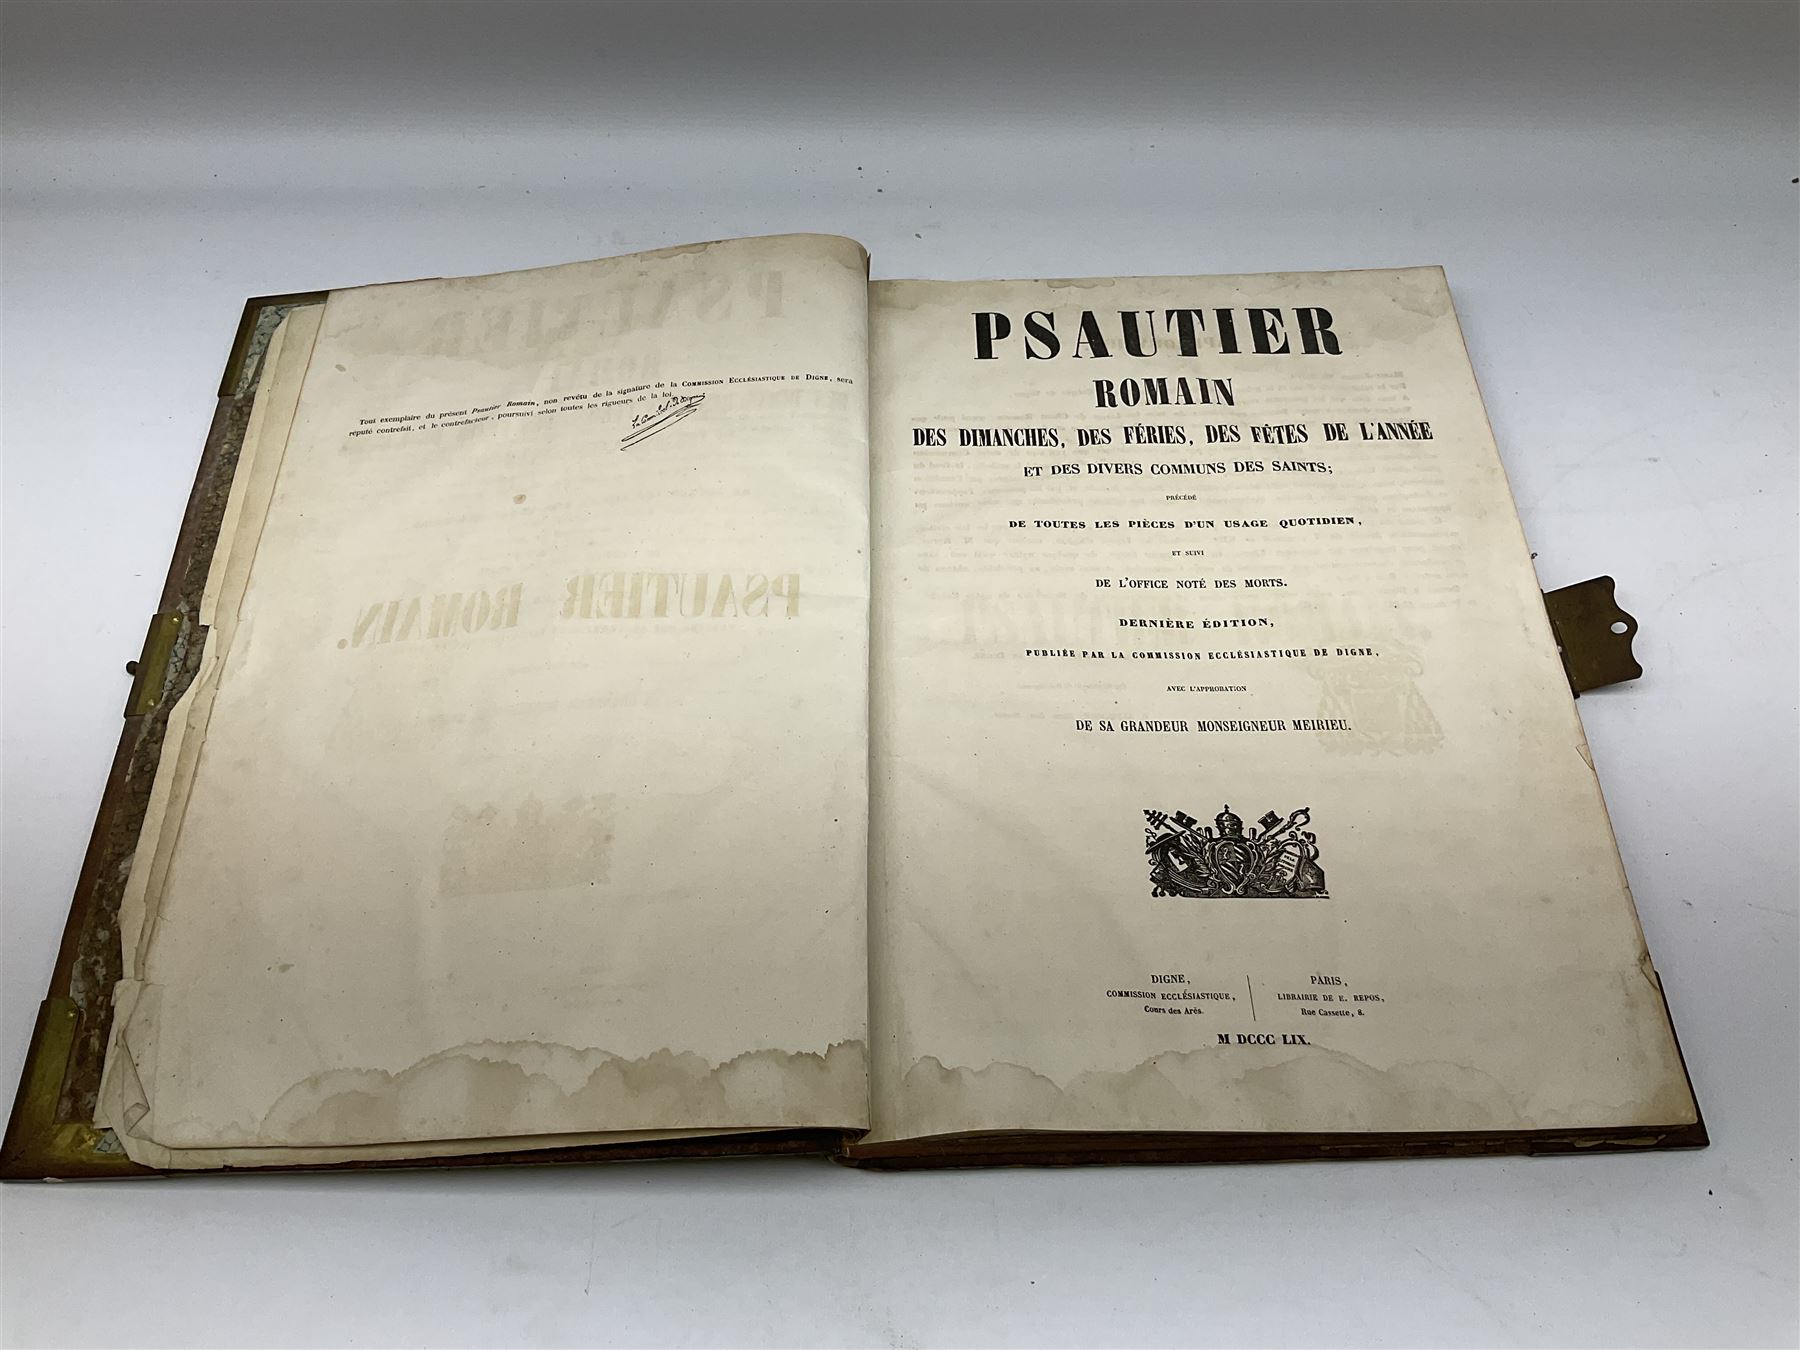 Six 19th century leather bound books of music comprising Graduale Juxta Missale Romanum and Antiphon - Image 21 of 21